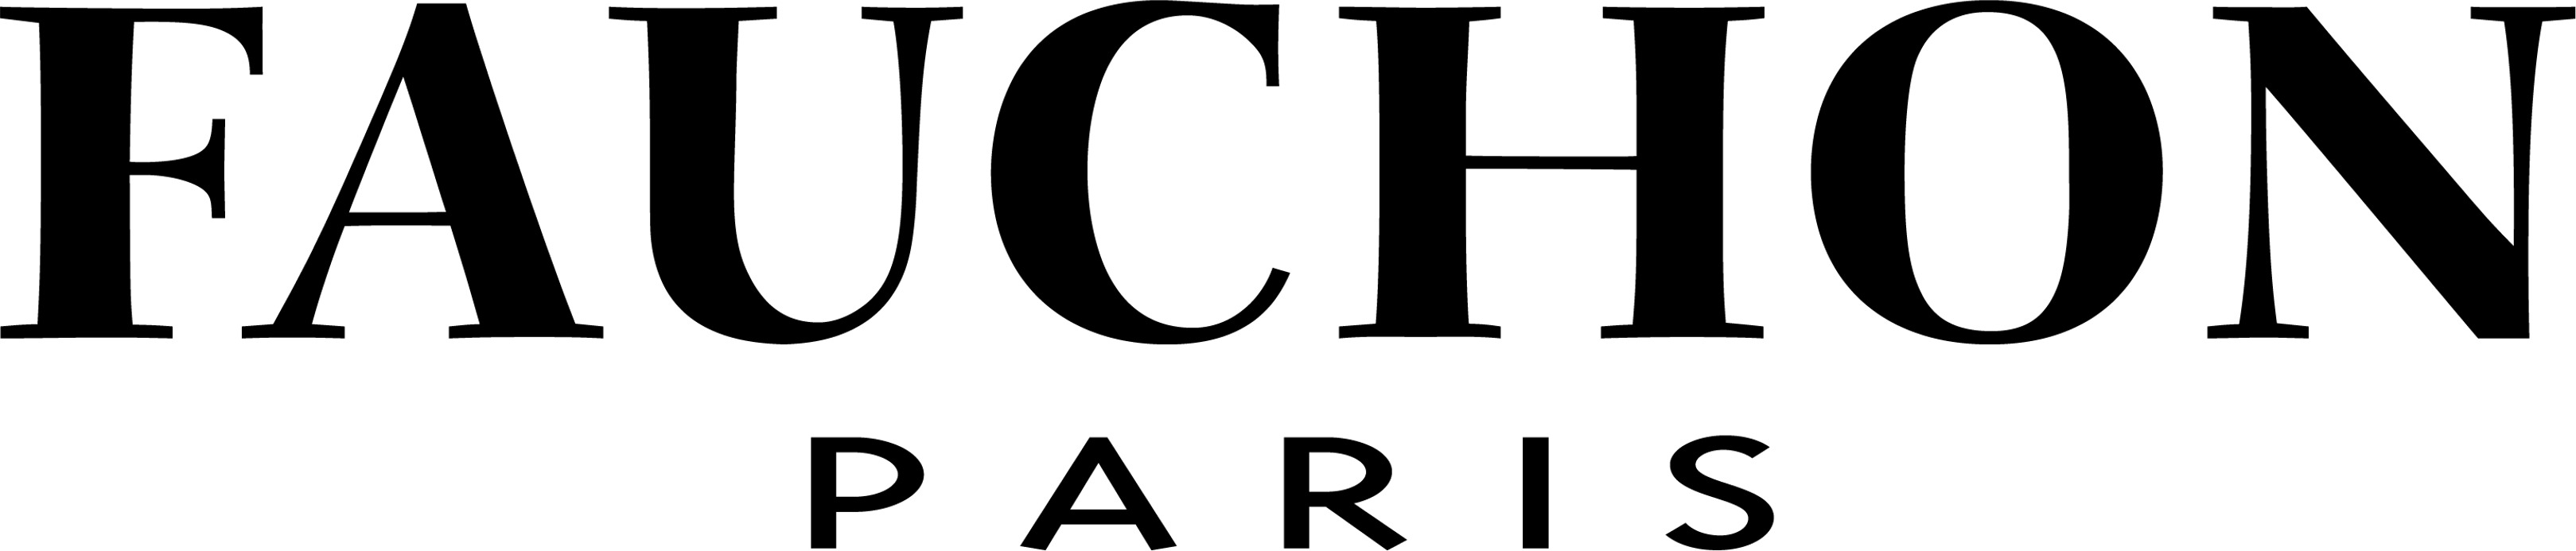 Fauchon logo